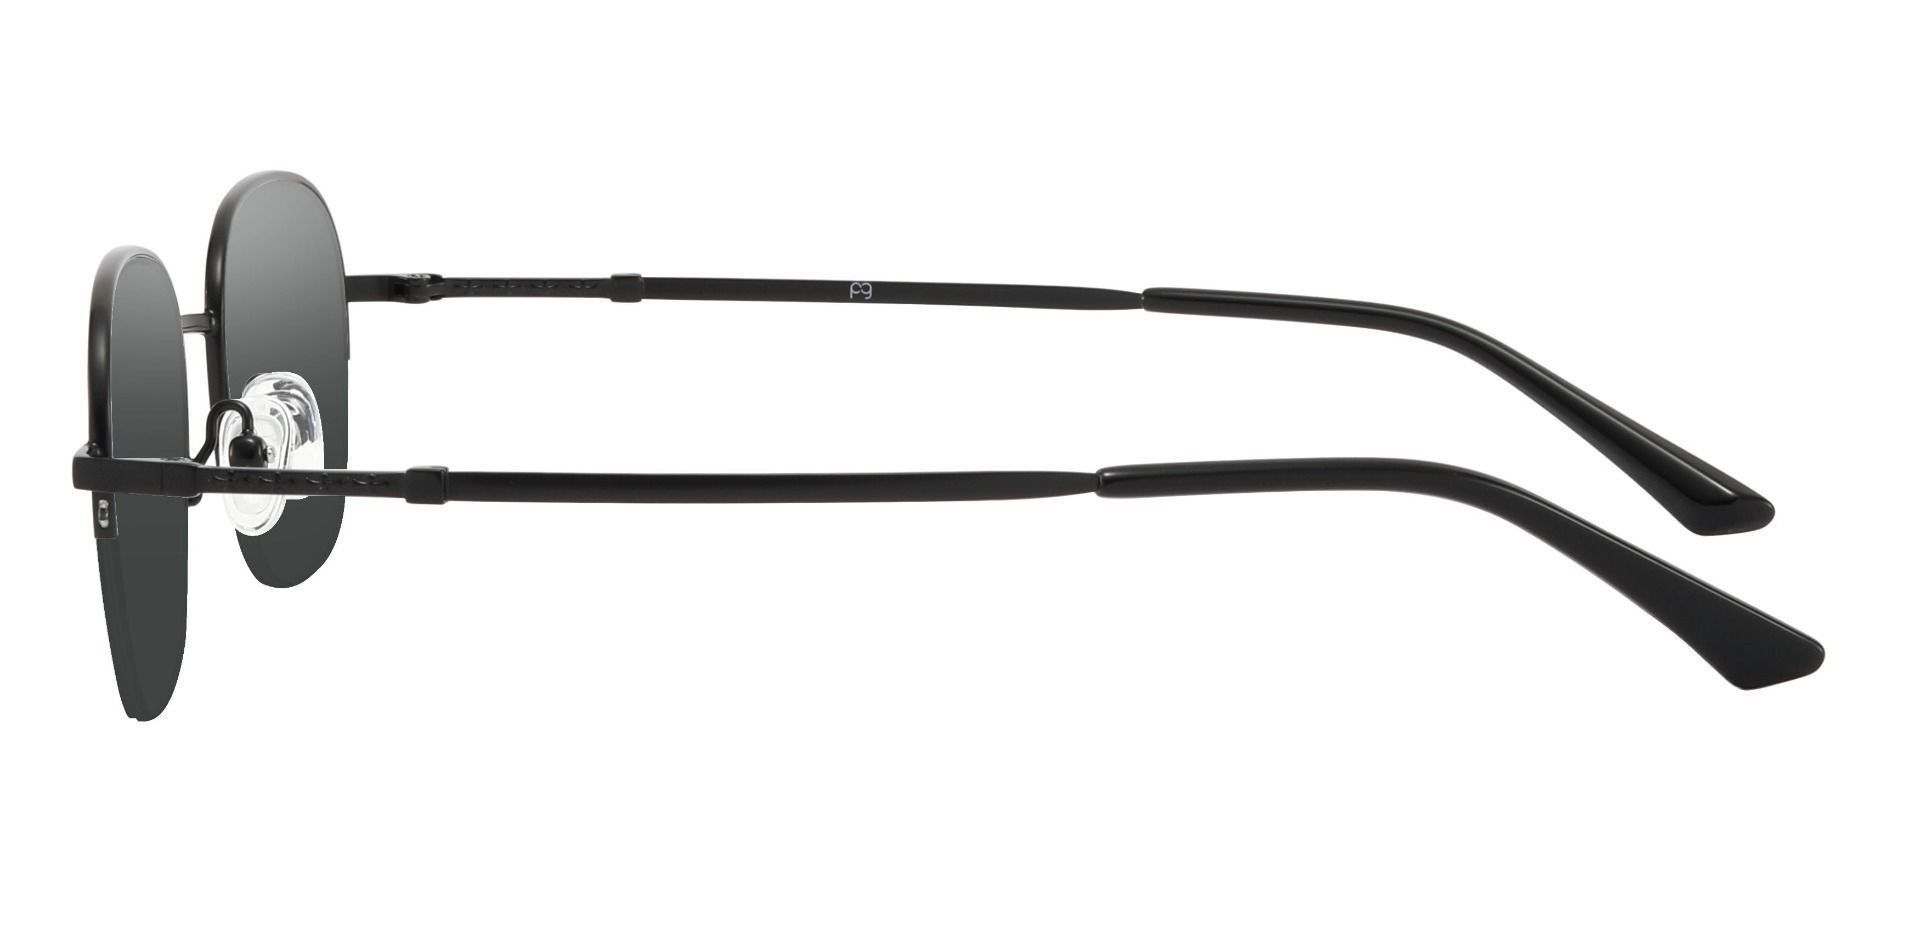 Rochester Oval Reading Sunglasses - Black Frame With Gray Lenses